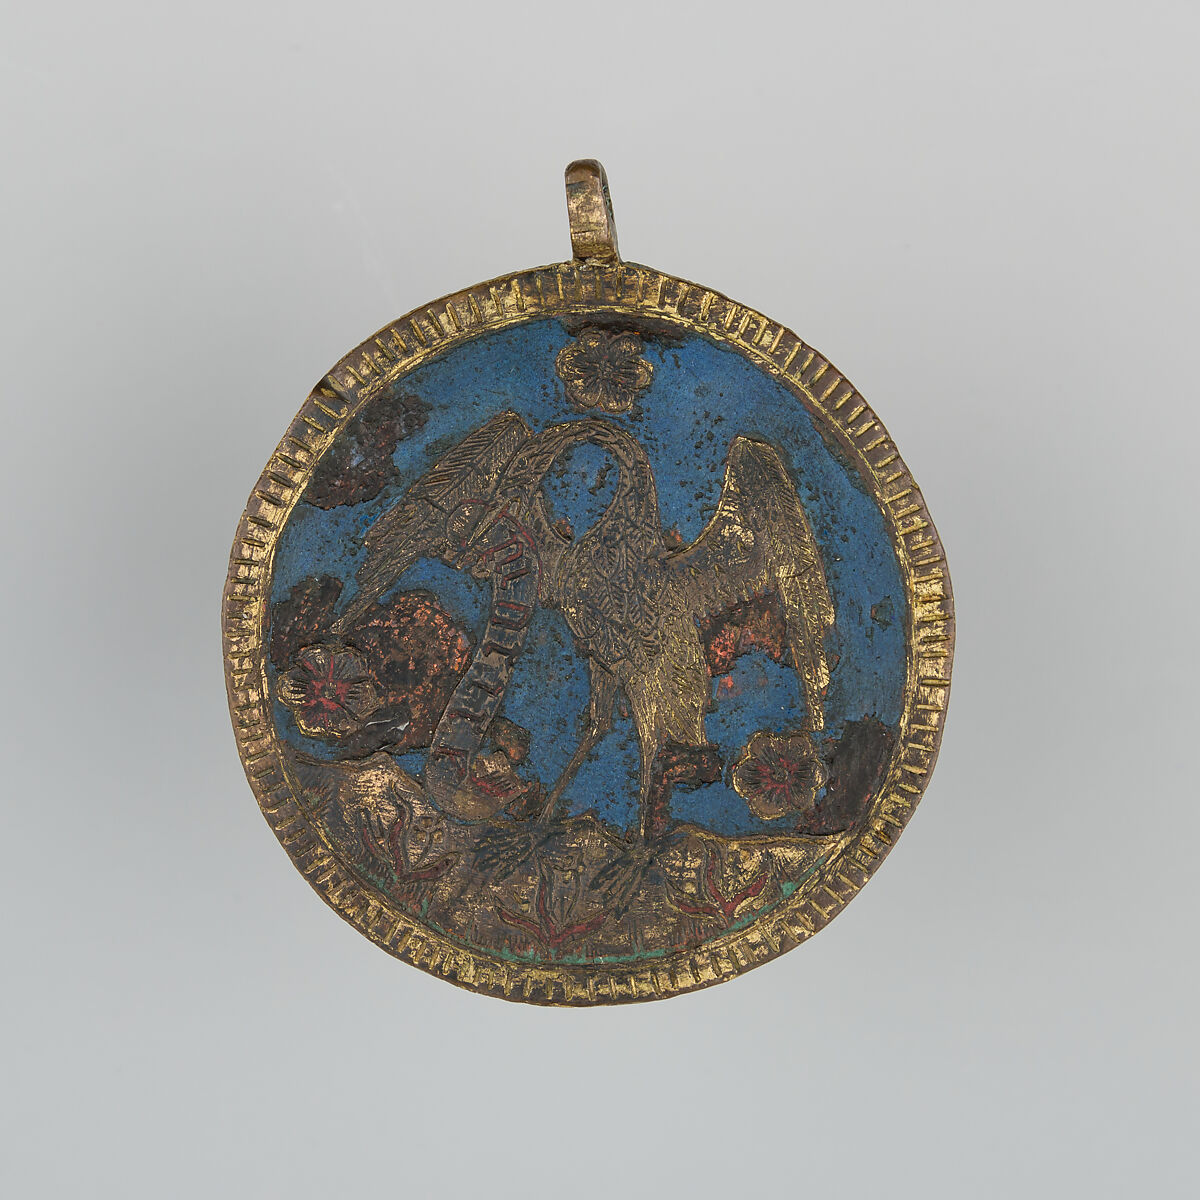 Badge or Harness Pendant, Copper, gold, enamel, probably Spanish 